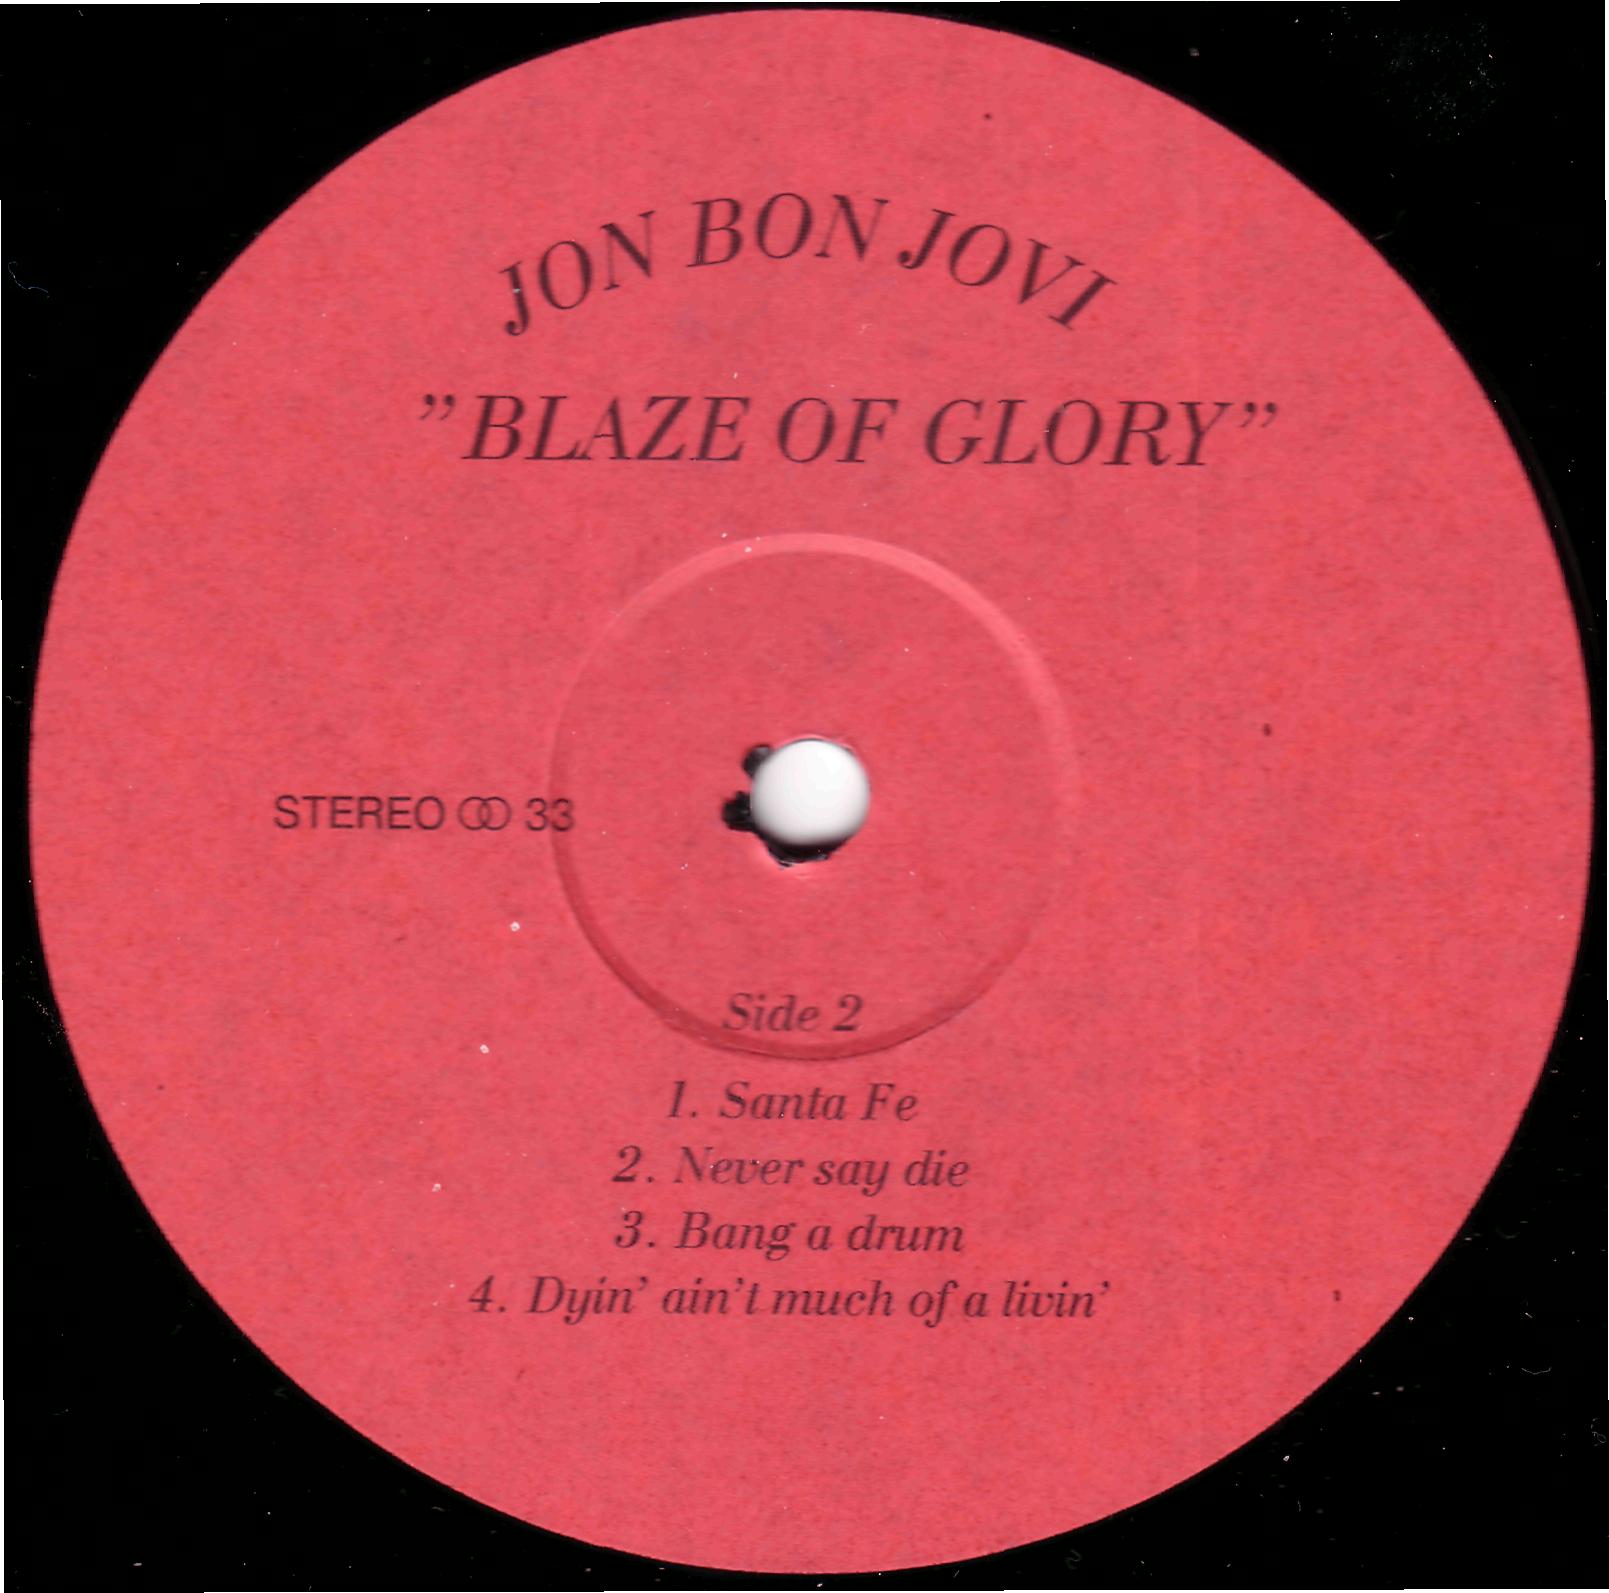 JON BON JOVI «Blaze Of Glory» (Inspired by the film «Young Guns II»)